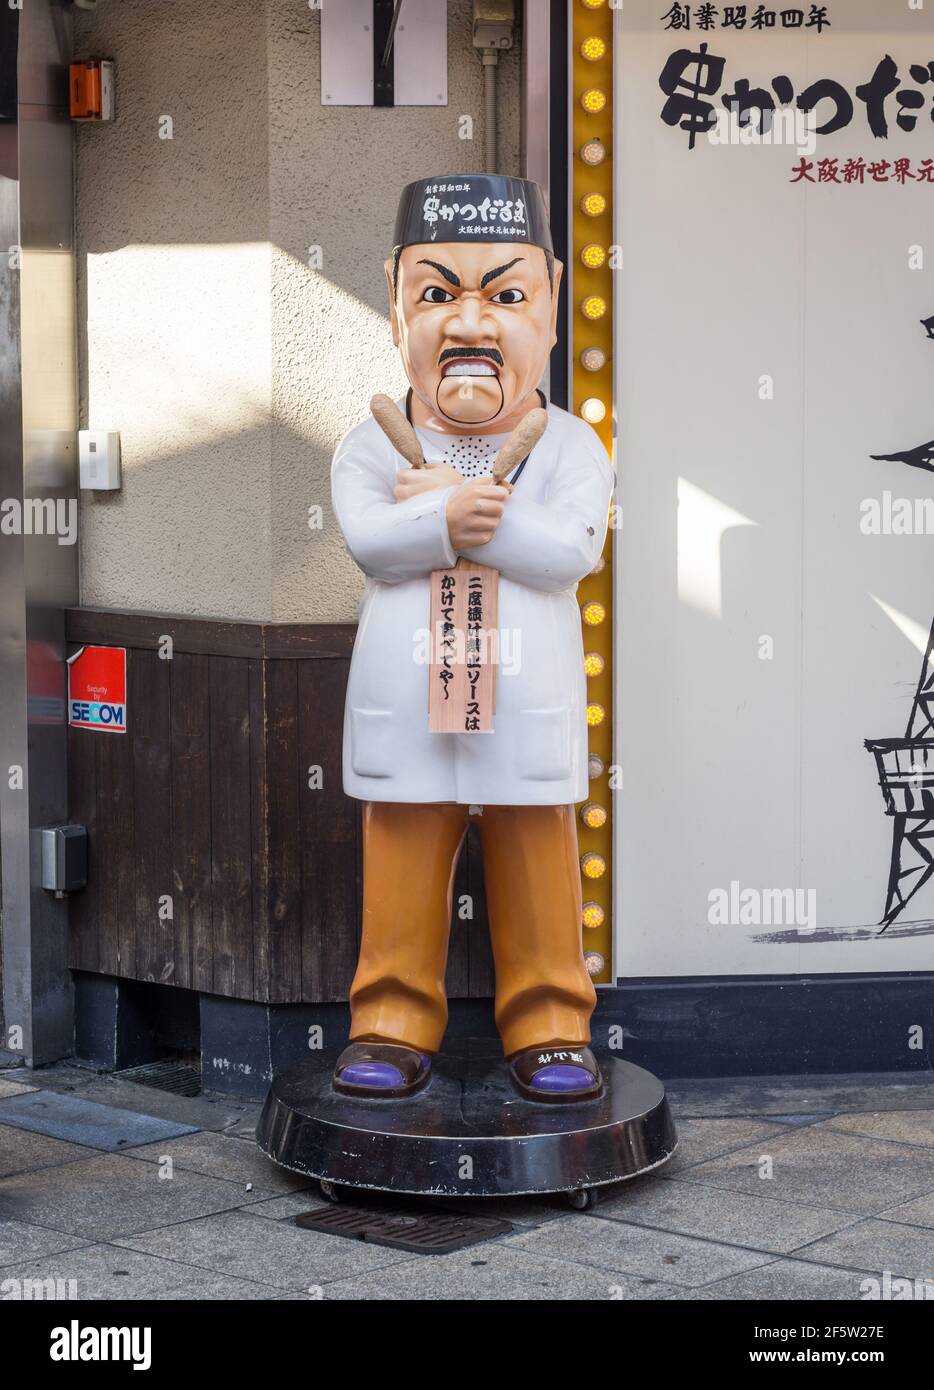 El personaje de Daruma Kushikatsu, un famoso restaurante de comida frita en Shinsekai, Tennoji, Osaka, Japón Foto de stock